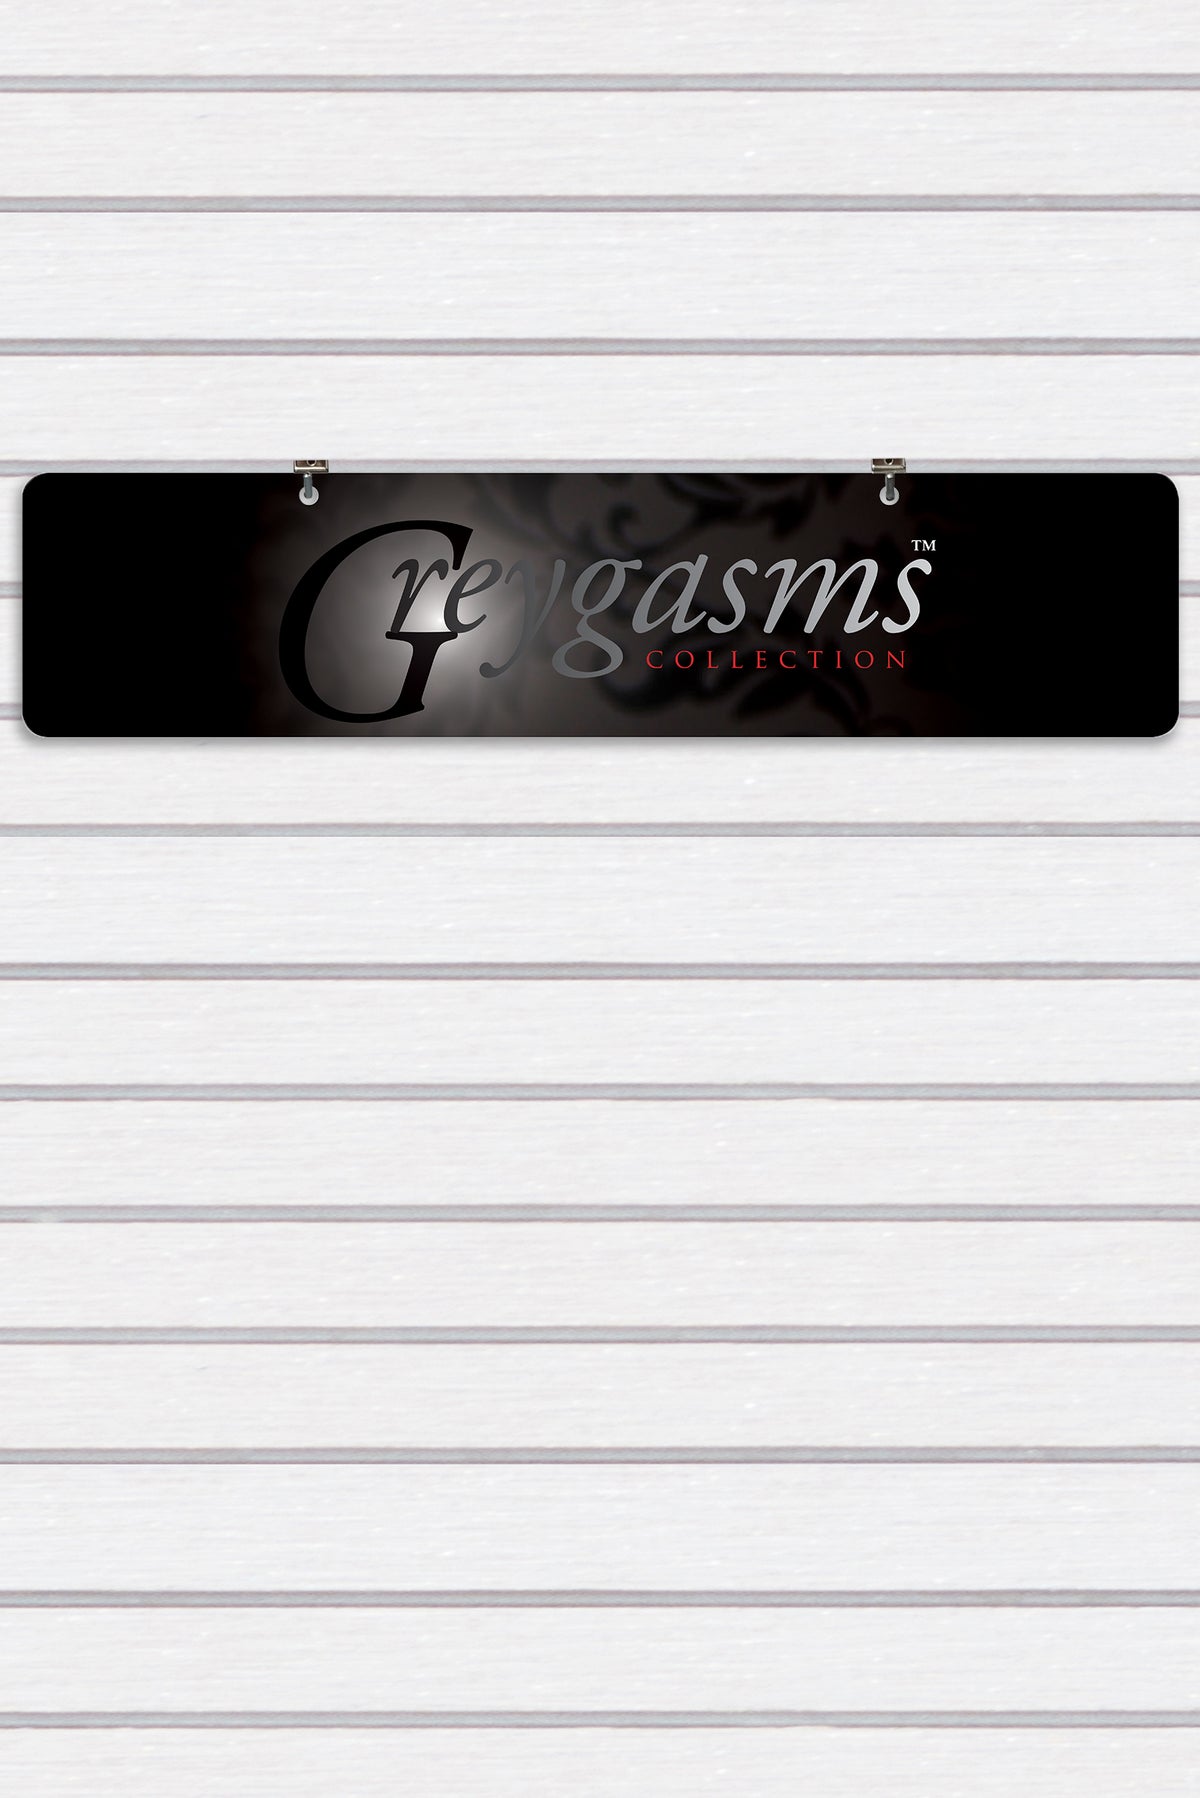 GreyGasms Display Sign